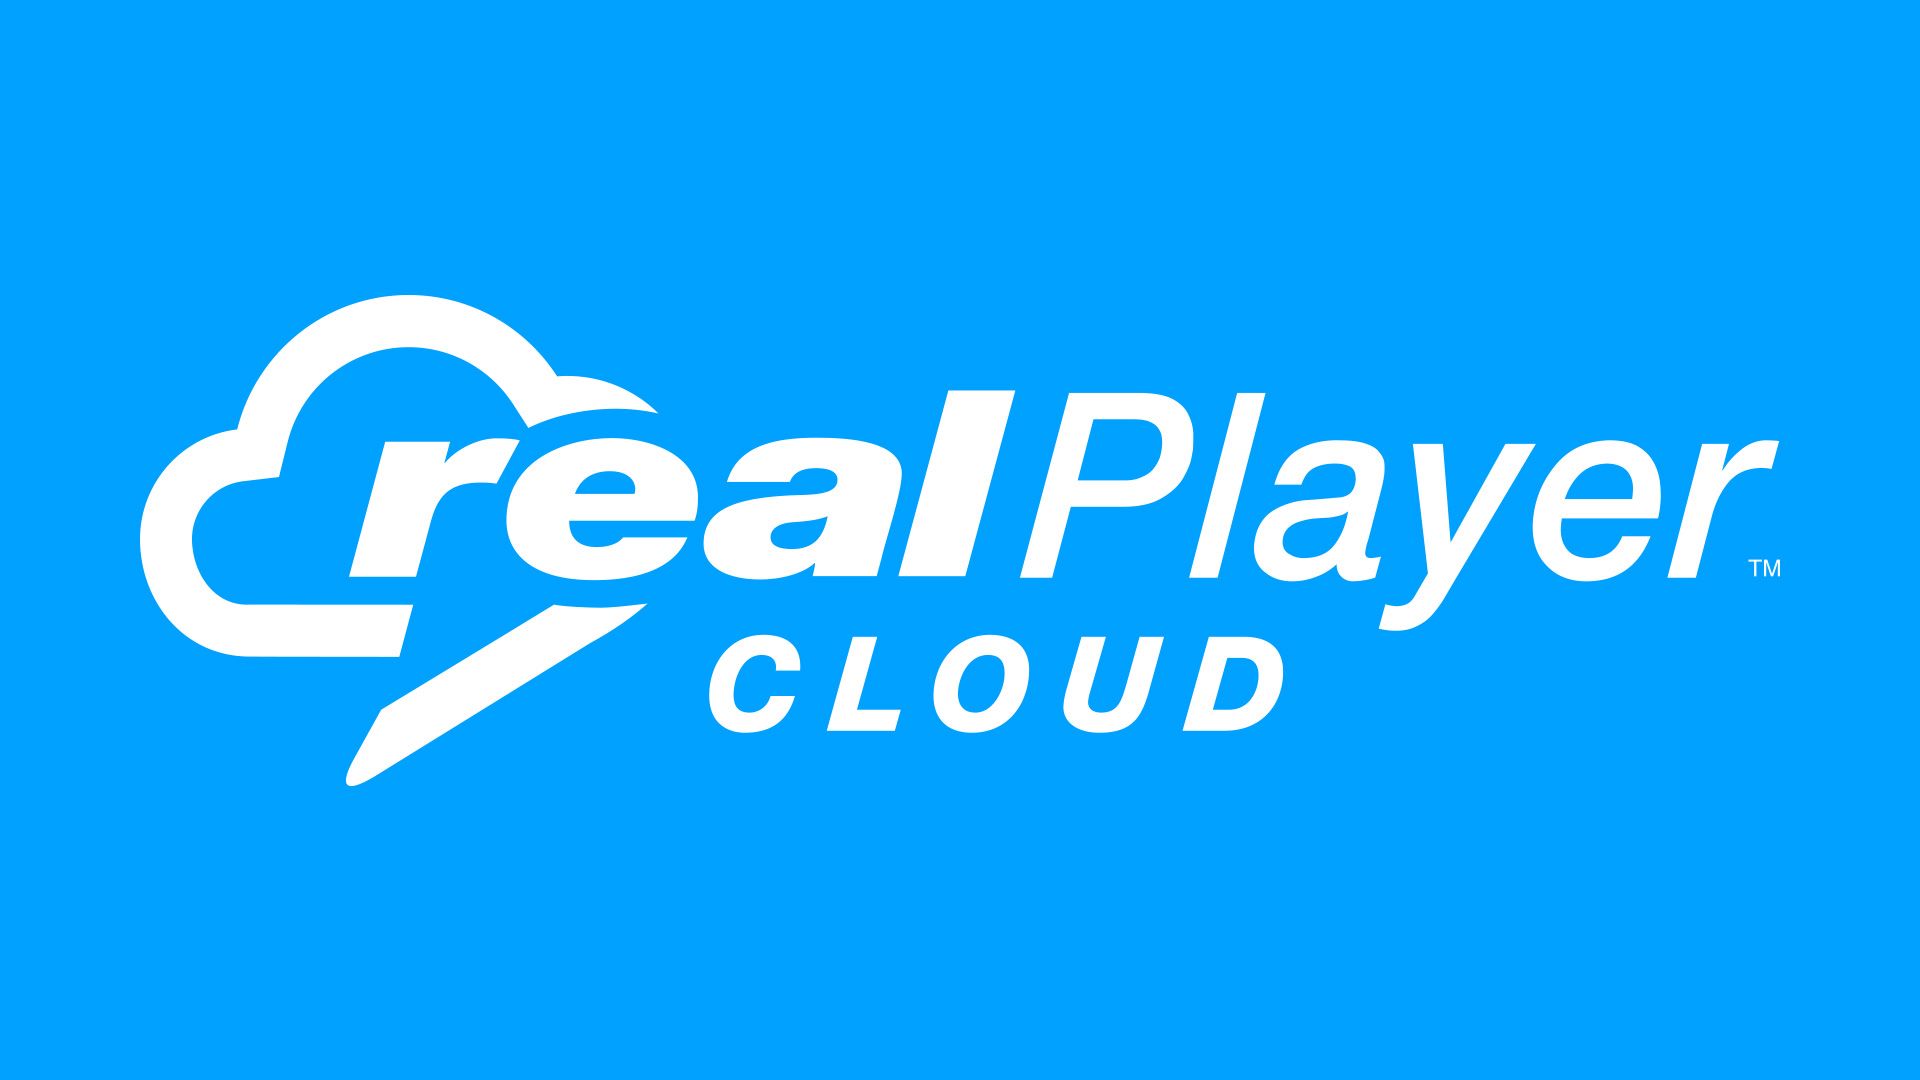 RealPlayer Cloud